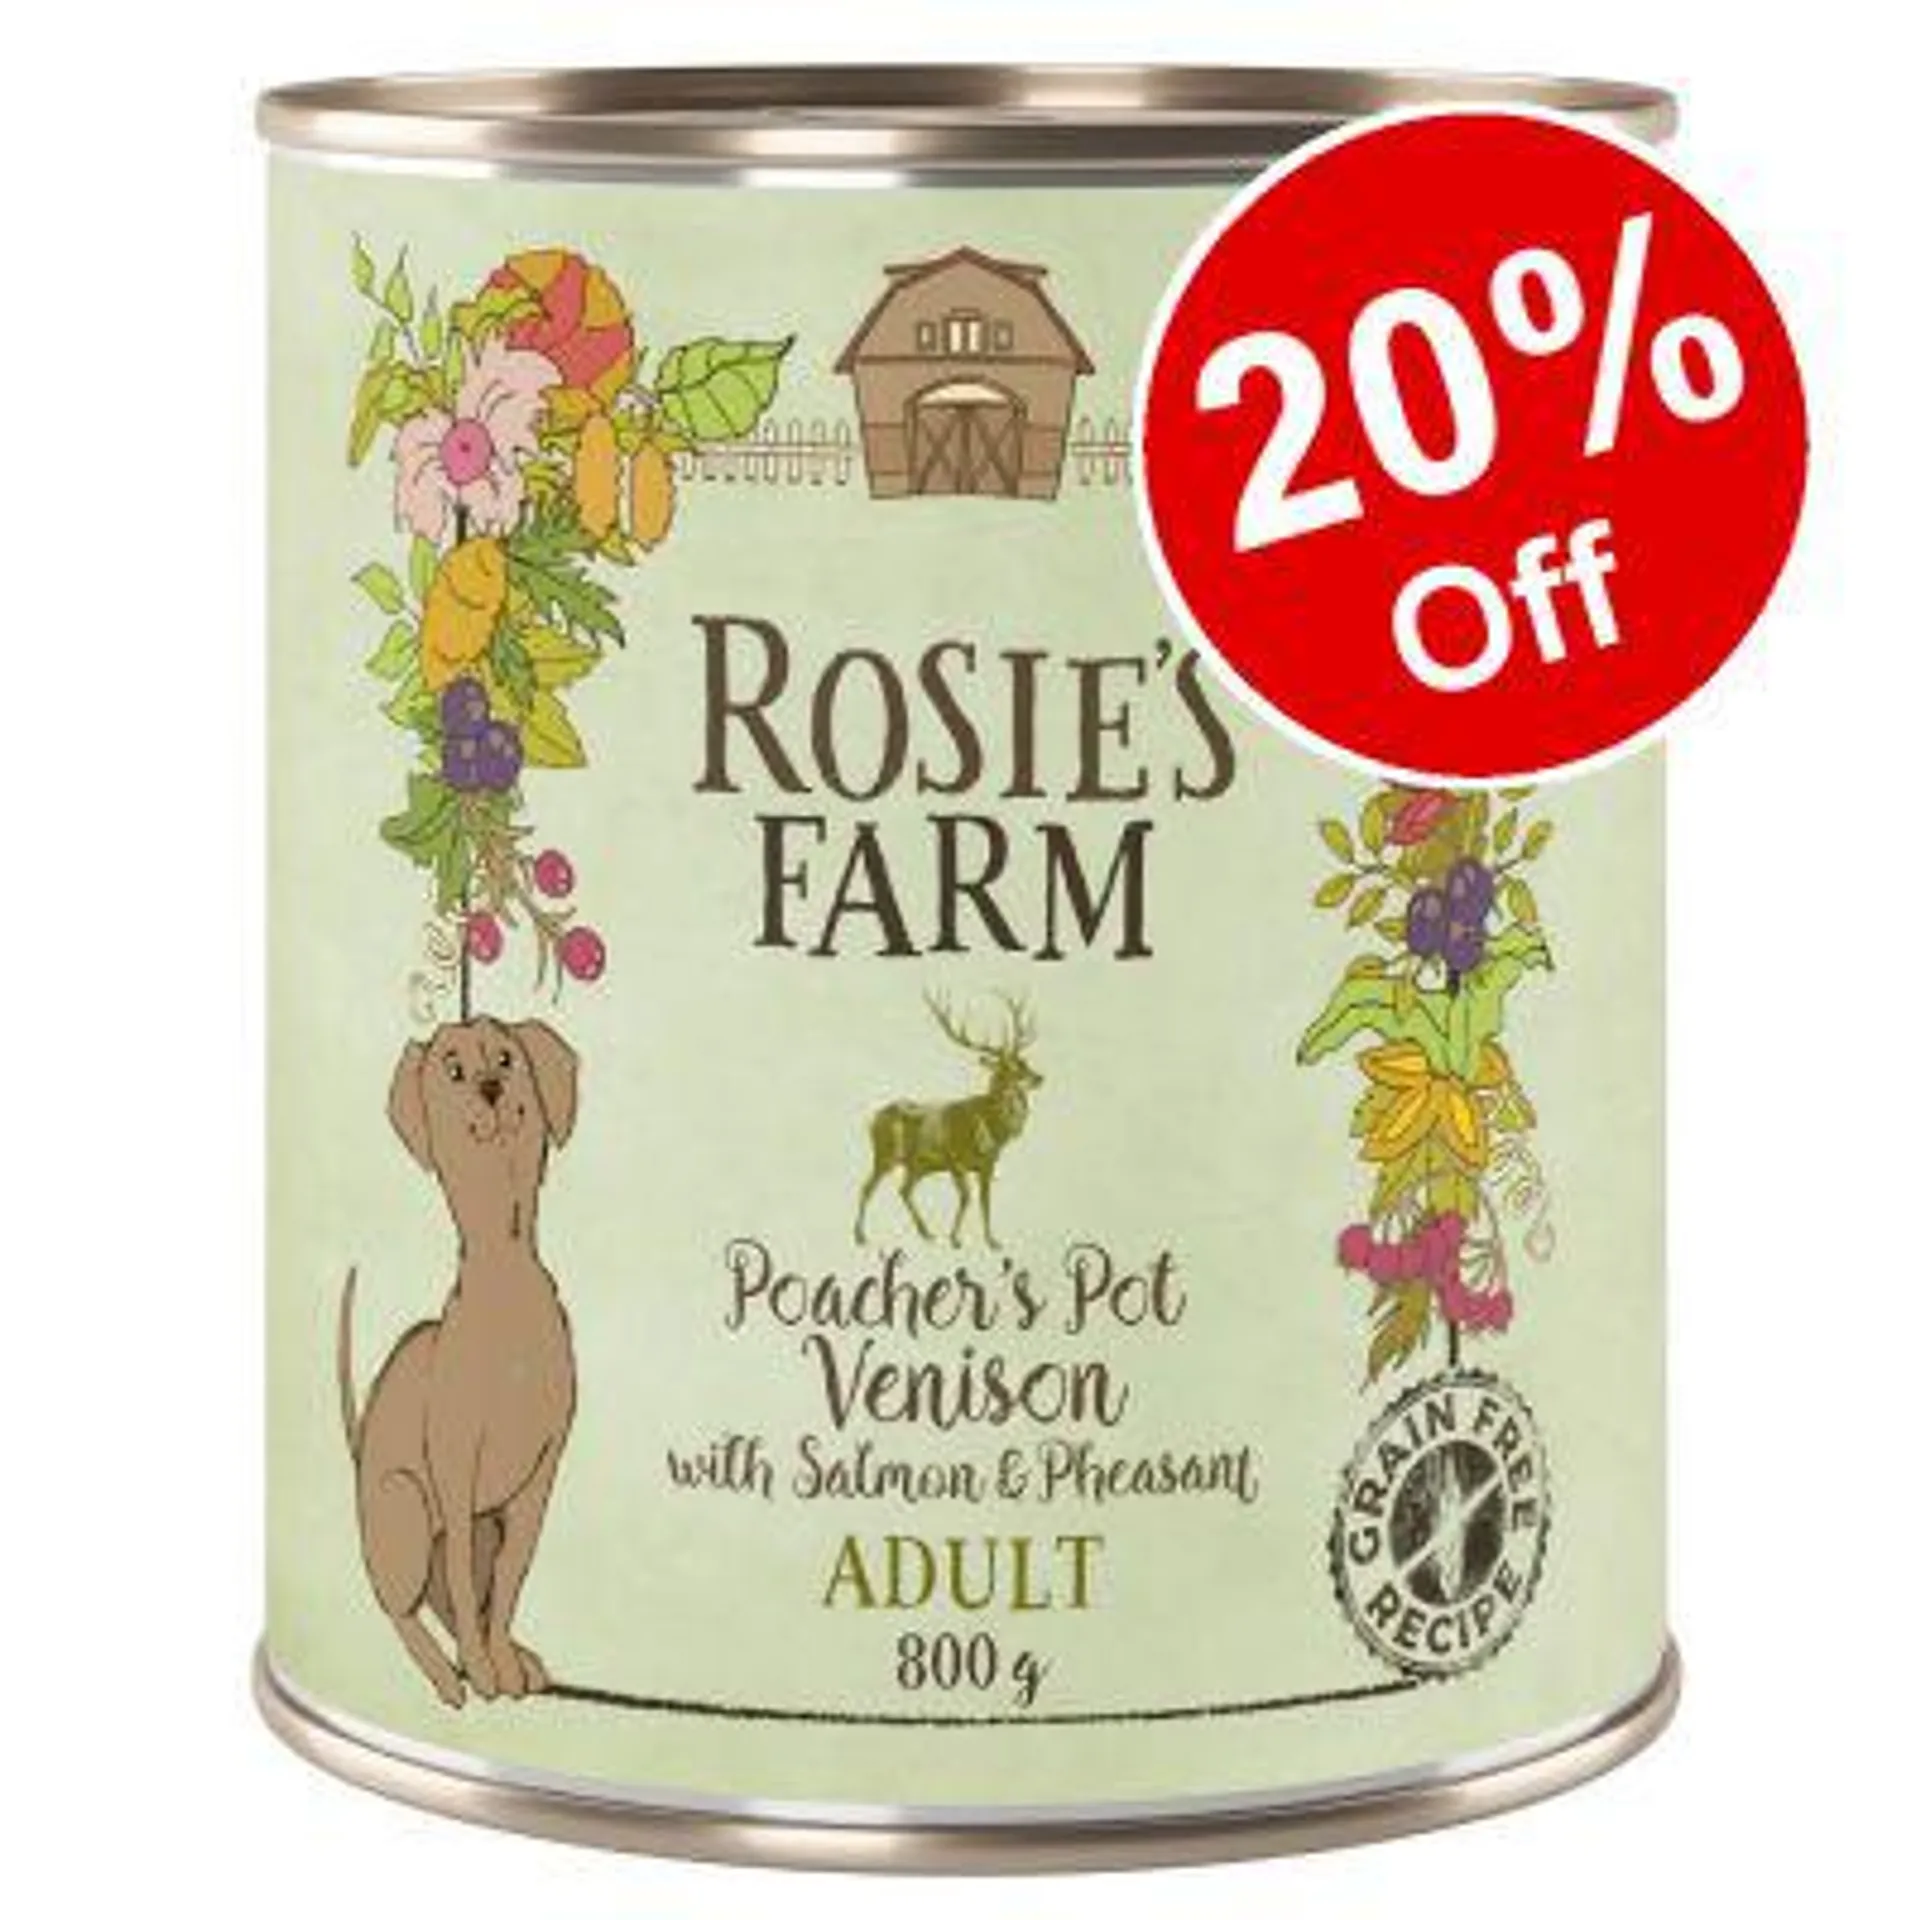 6 x 800g Rosie's Farm Wet Dog Food - 20% Off!*